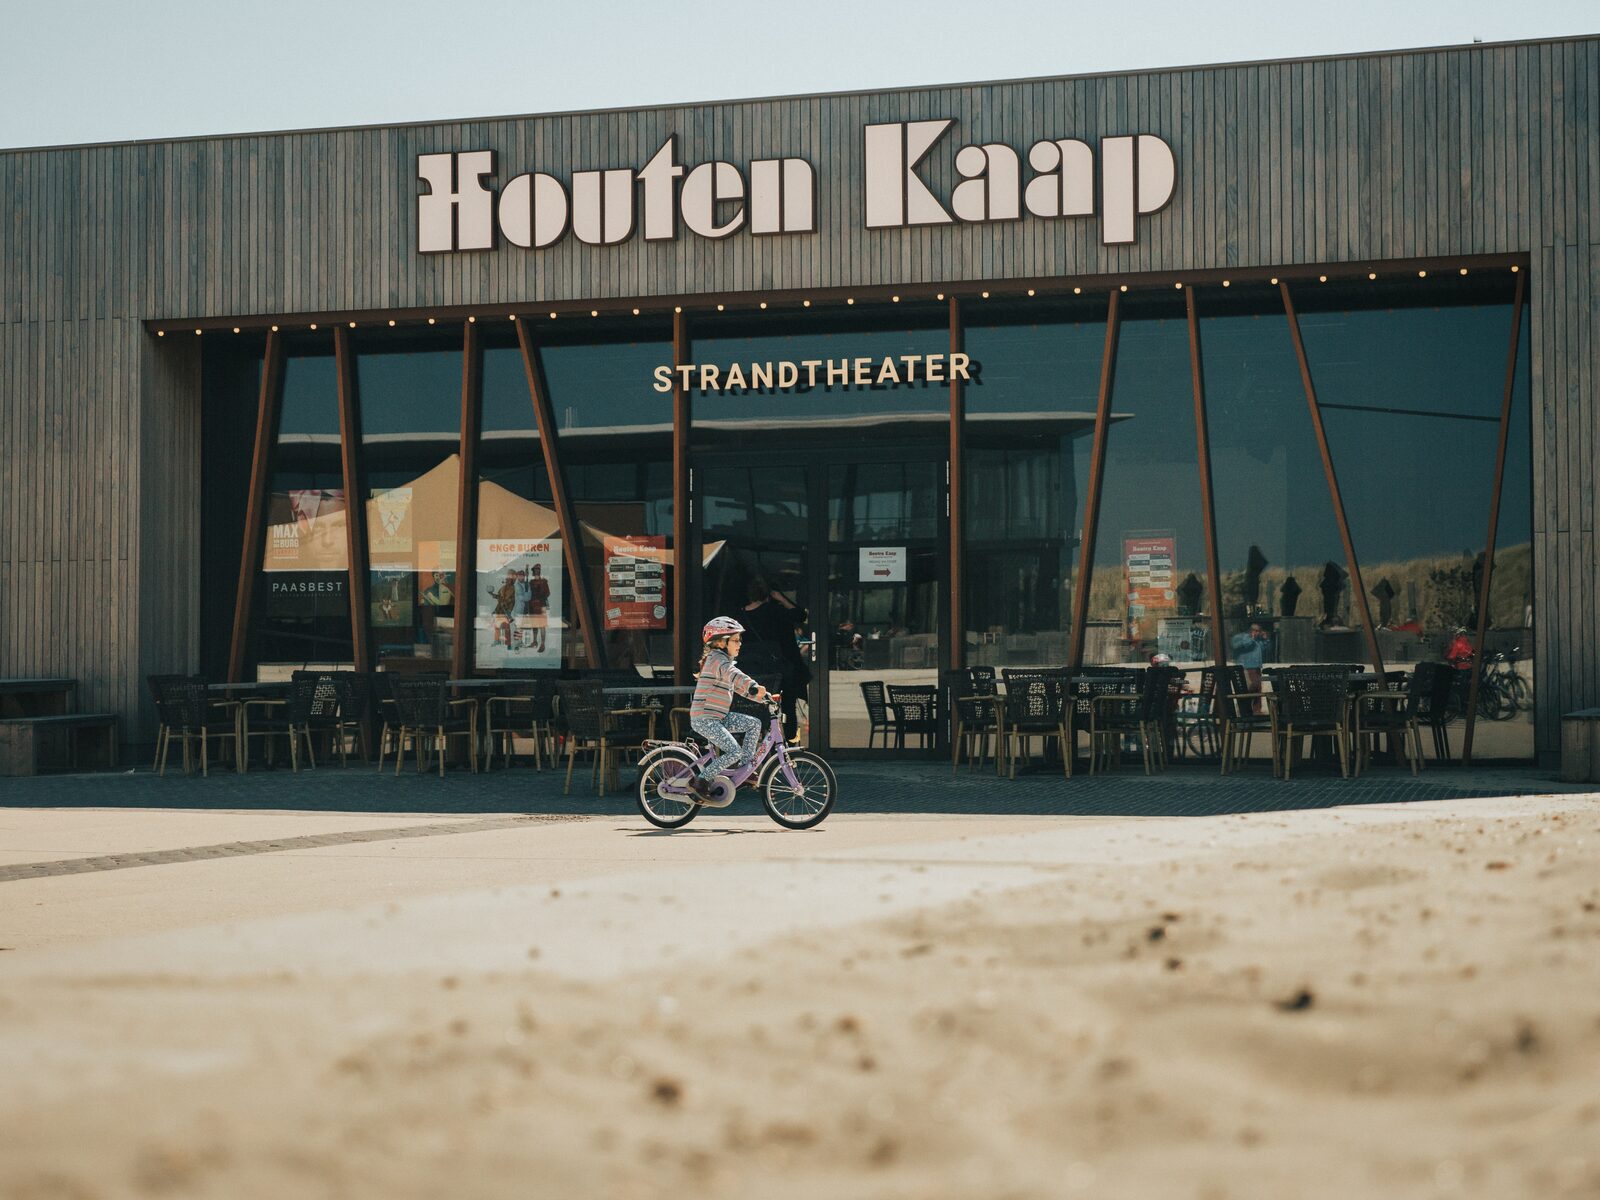 Strand-Theater Houten Kaap in Ouddorp